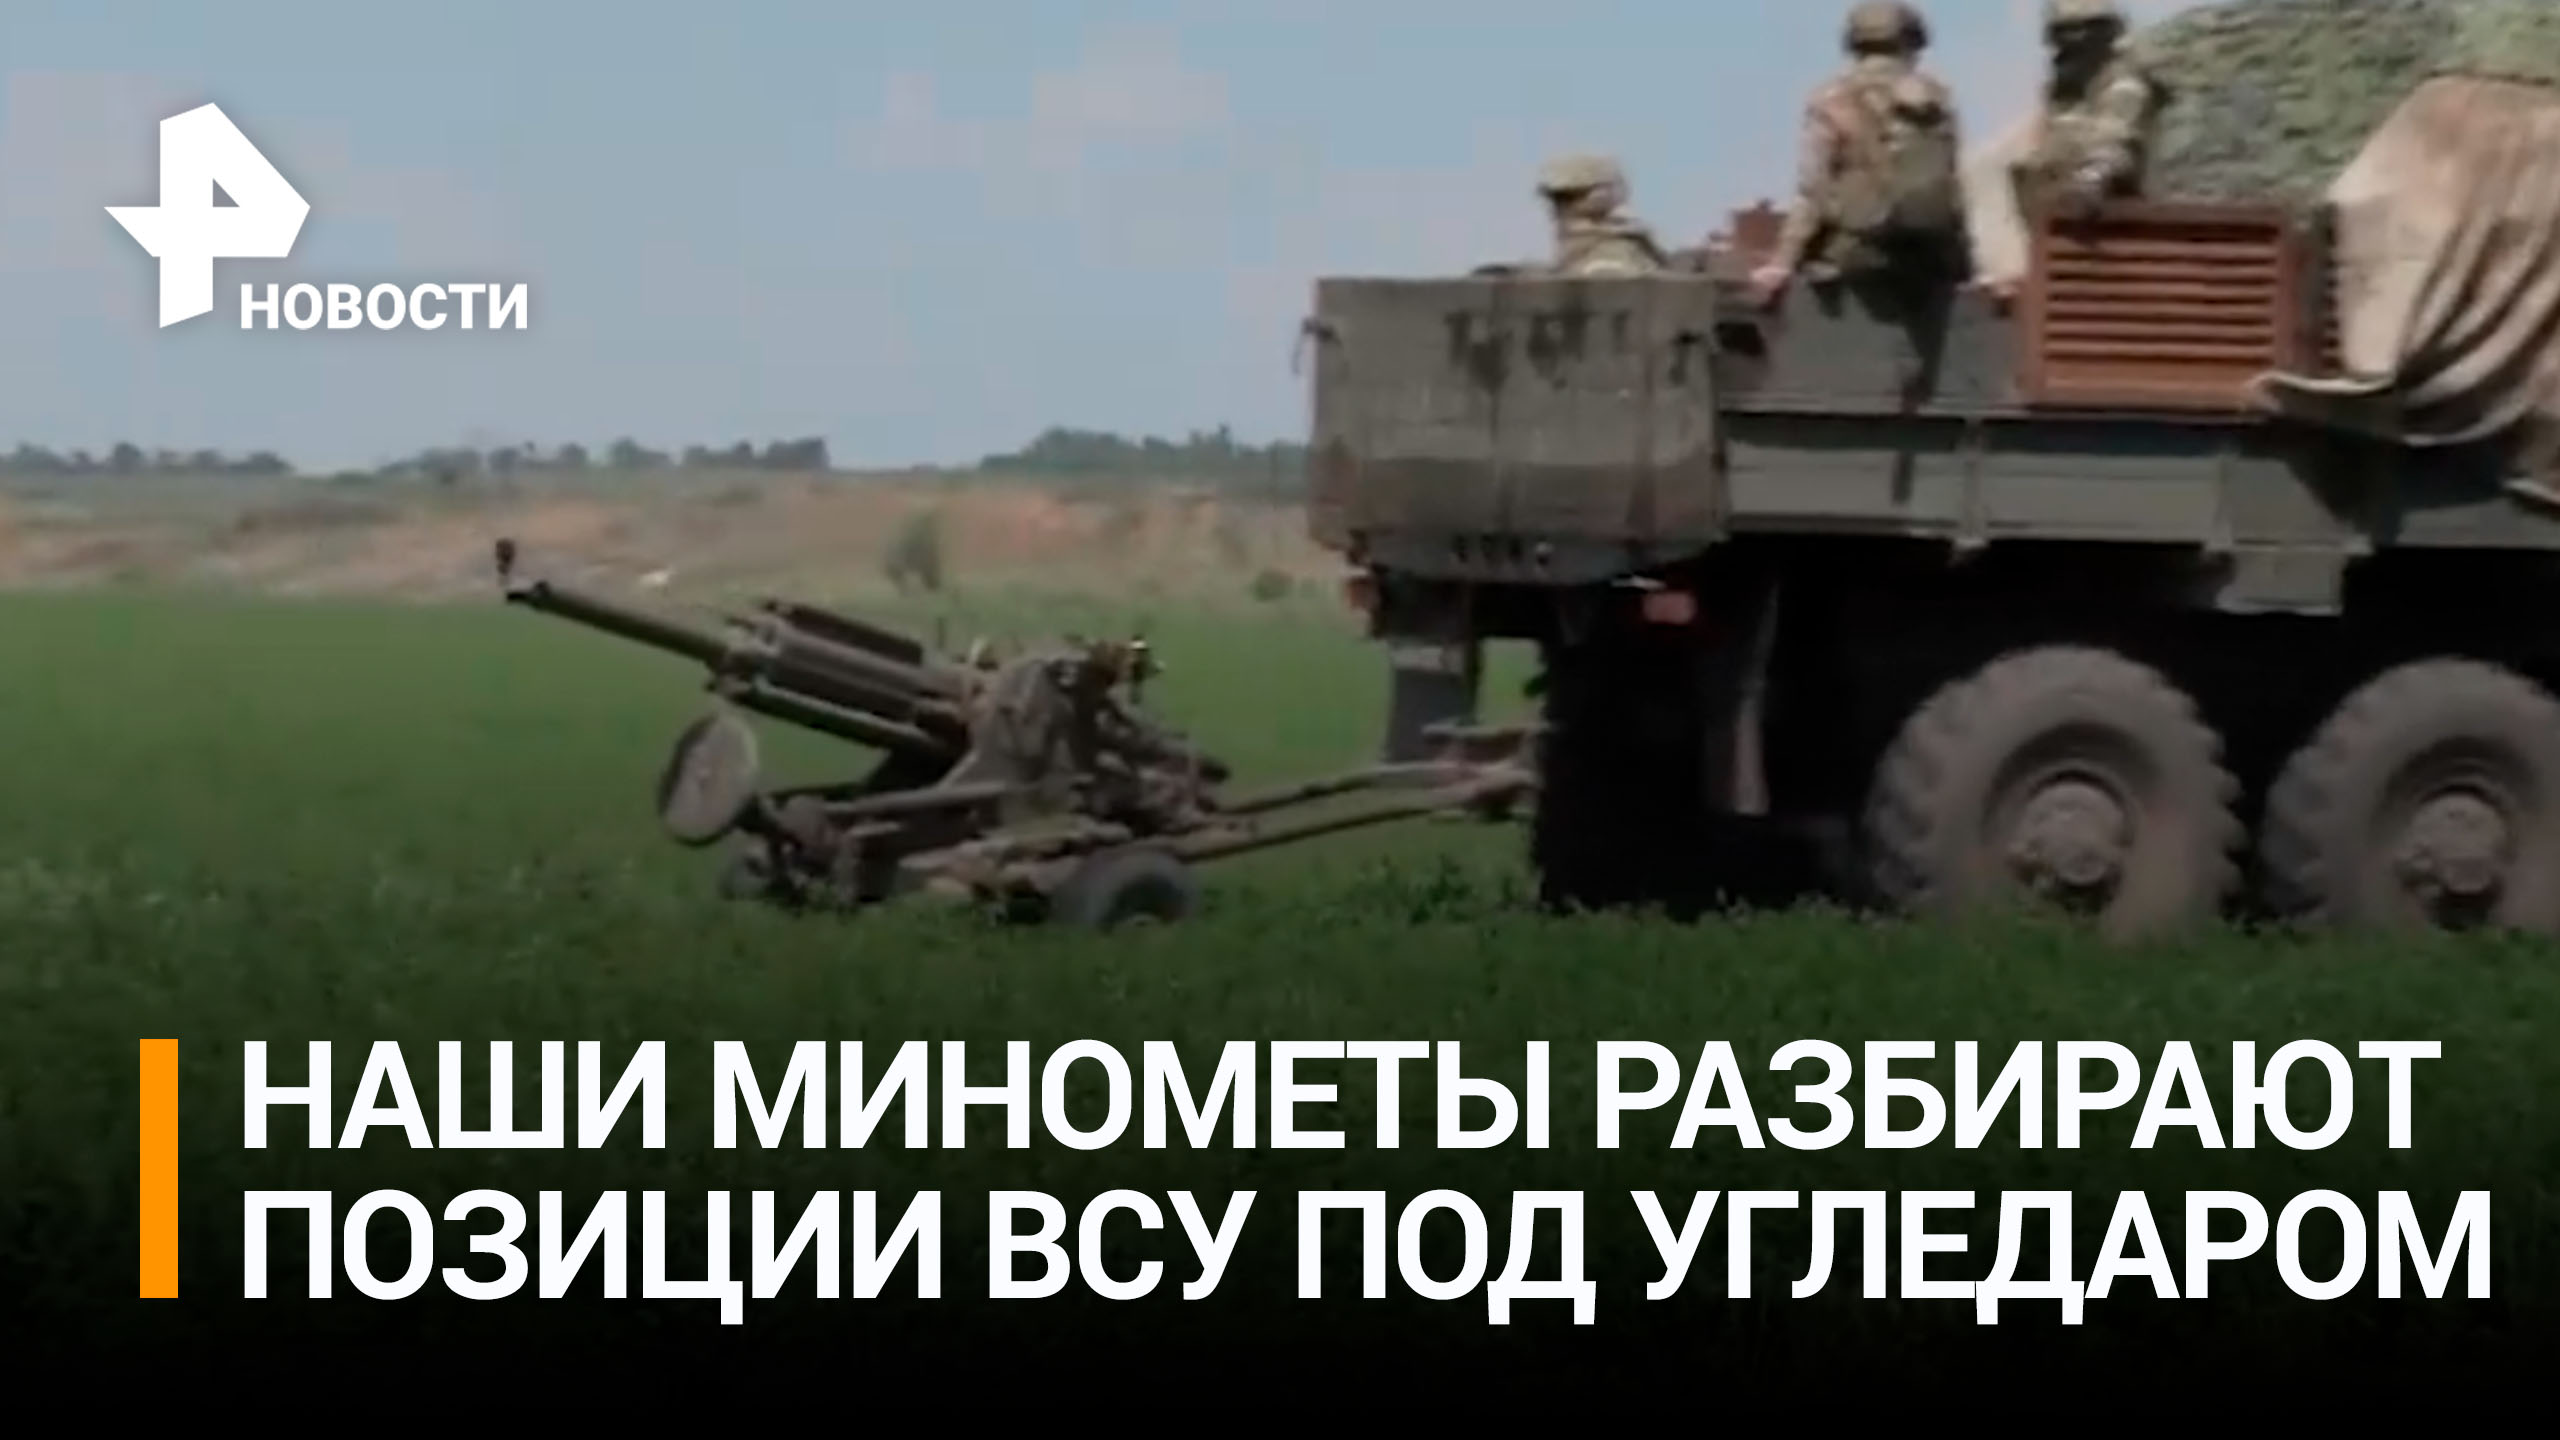 Российские минометчики разбивают позиции ВСУ под Угледаром / РЕН Новости